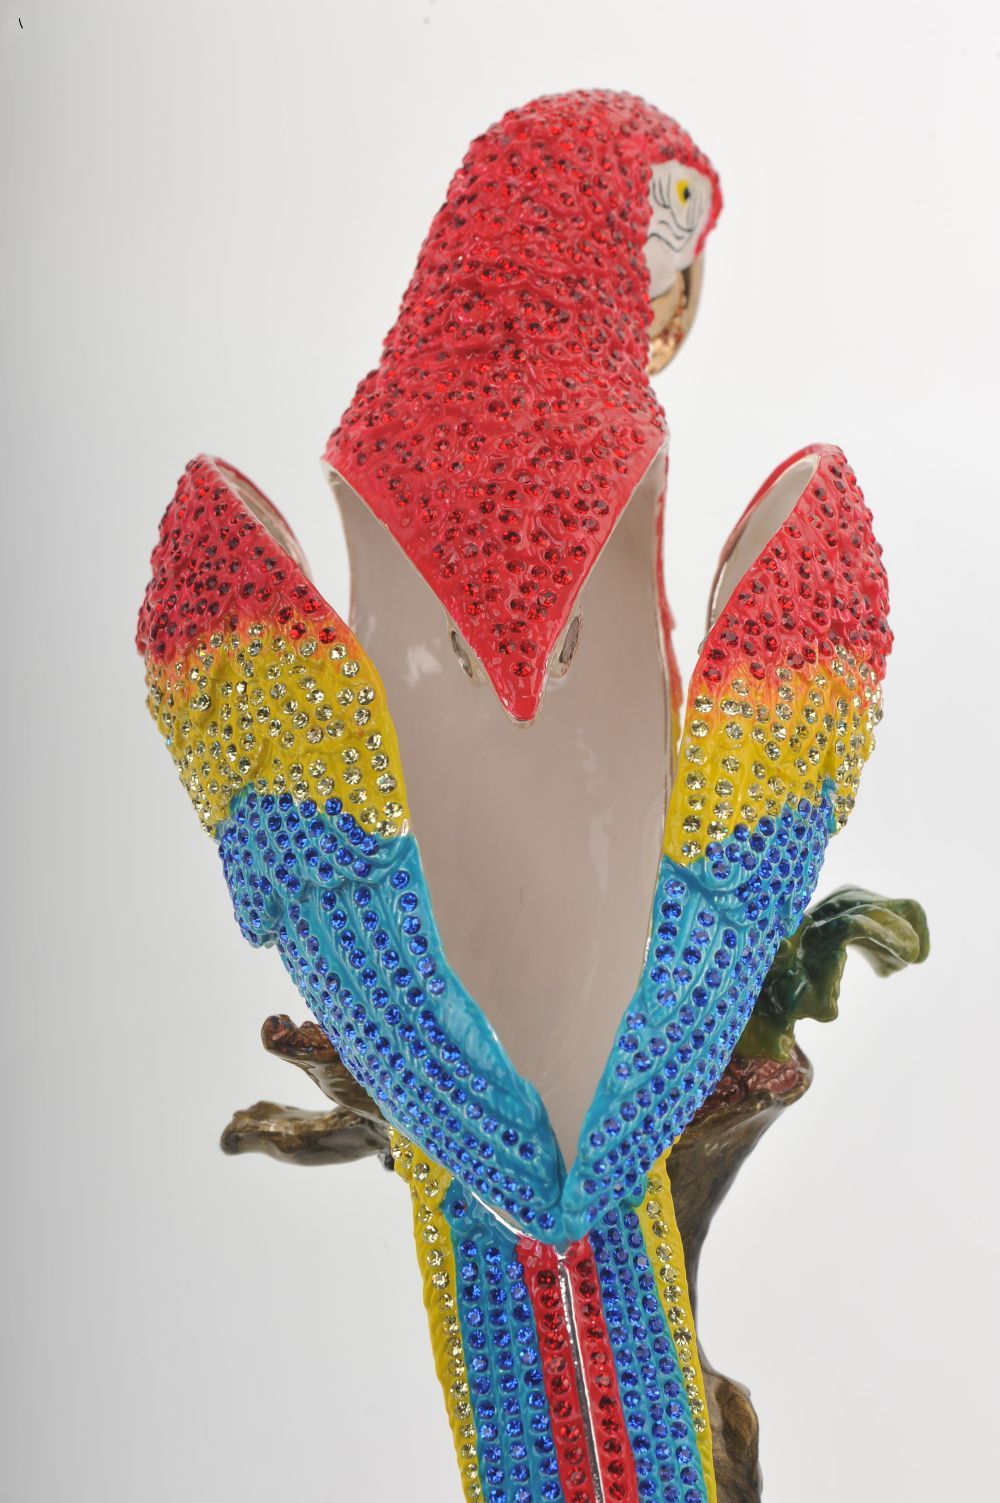 Keren Kopal Colorful Parrot  516.00